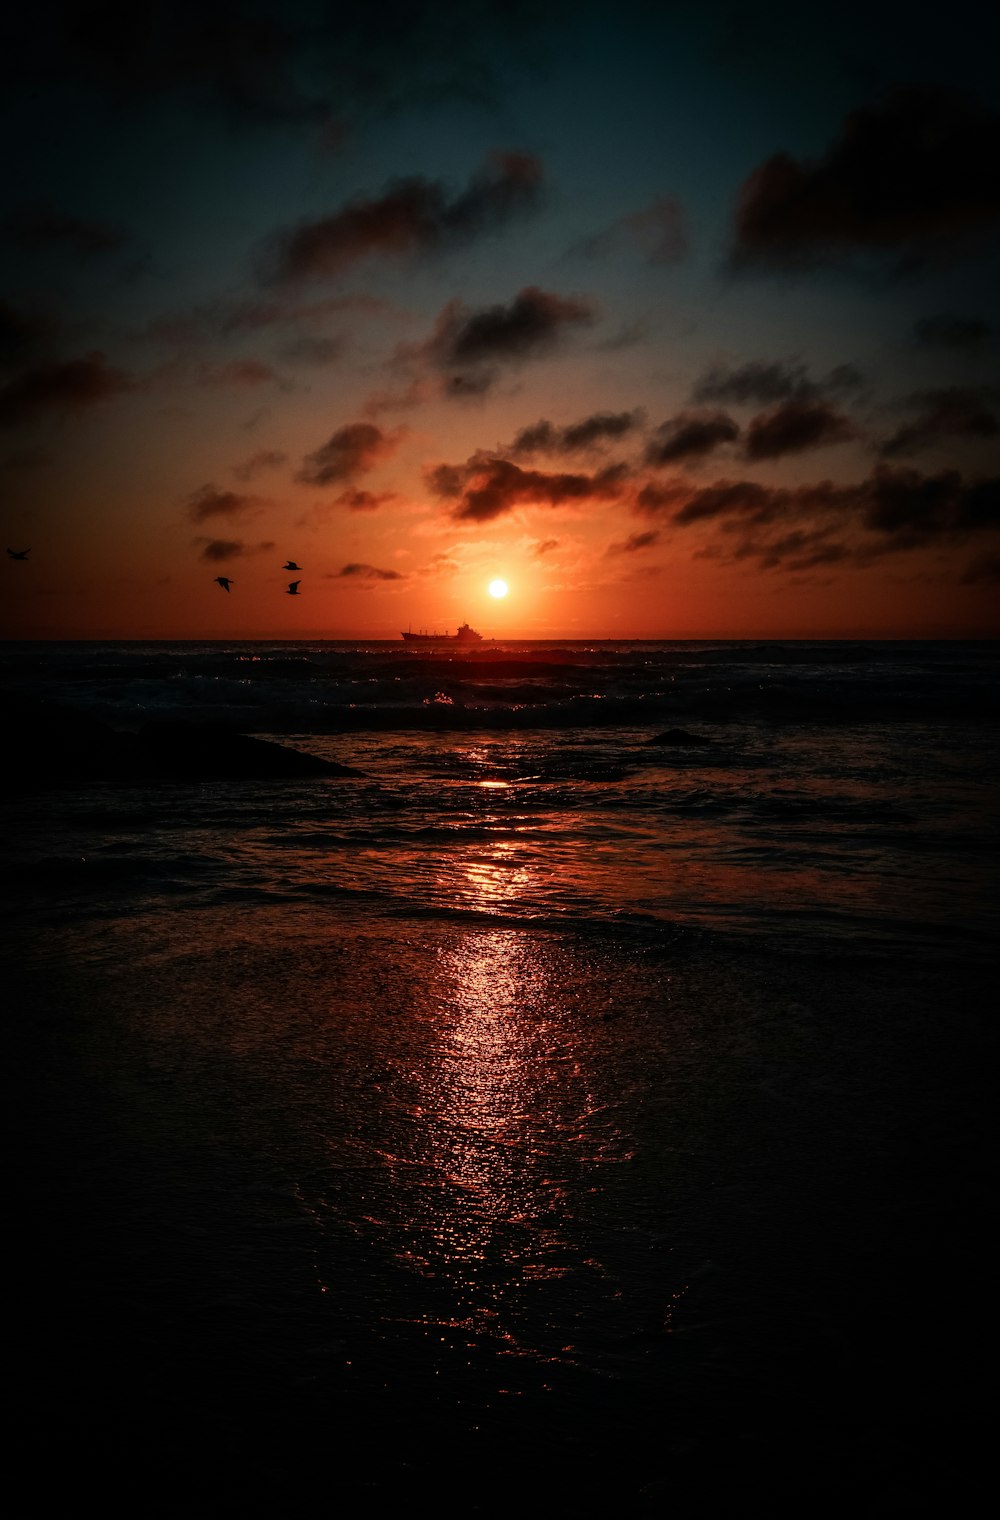 pássaros voando sobre o oceano ondulado durante o pôr do sol